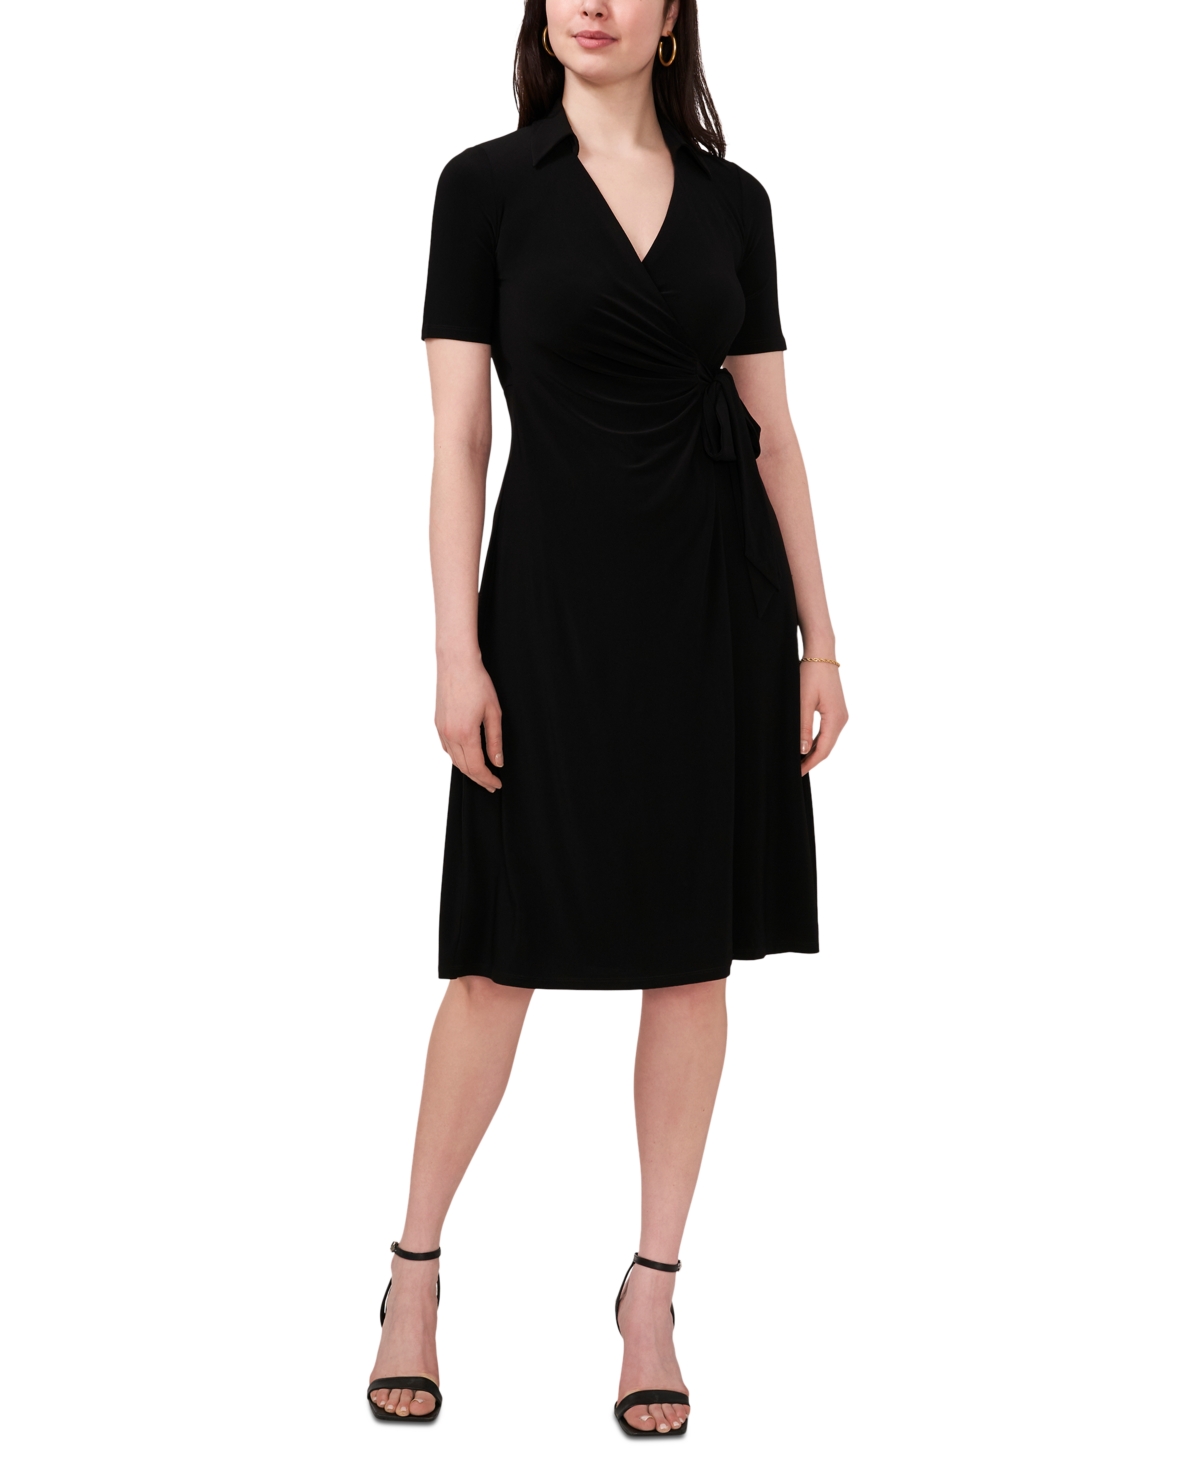 Petite Short-Sleeve Side-Tied Dress - Black